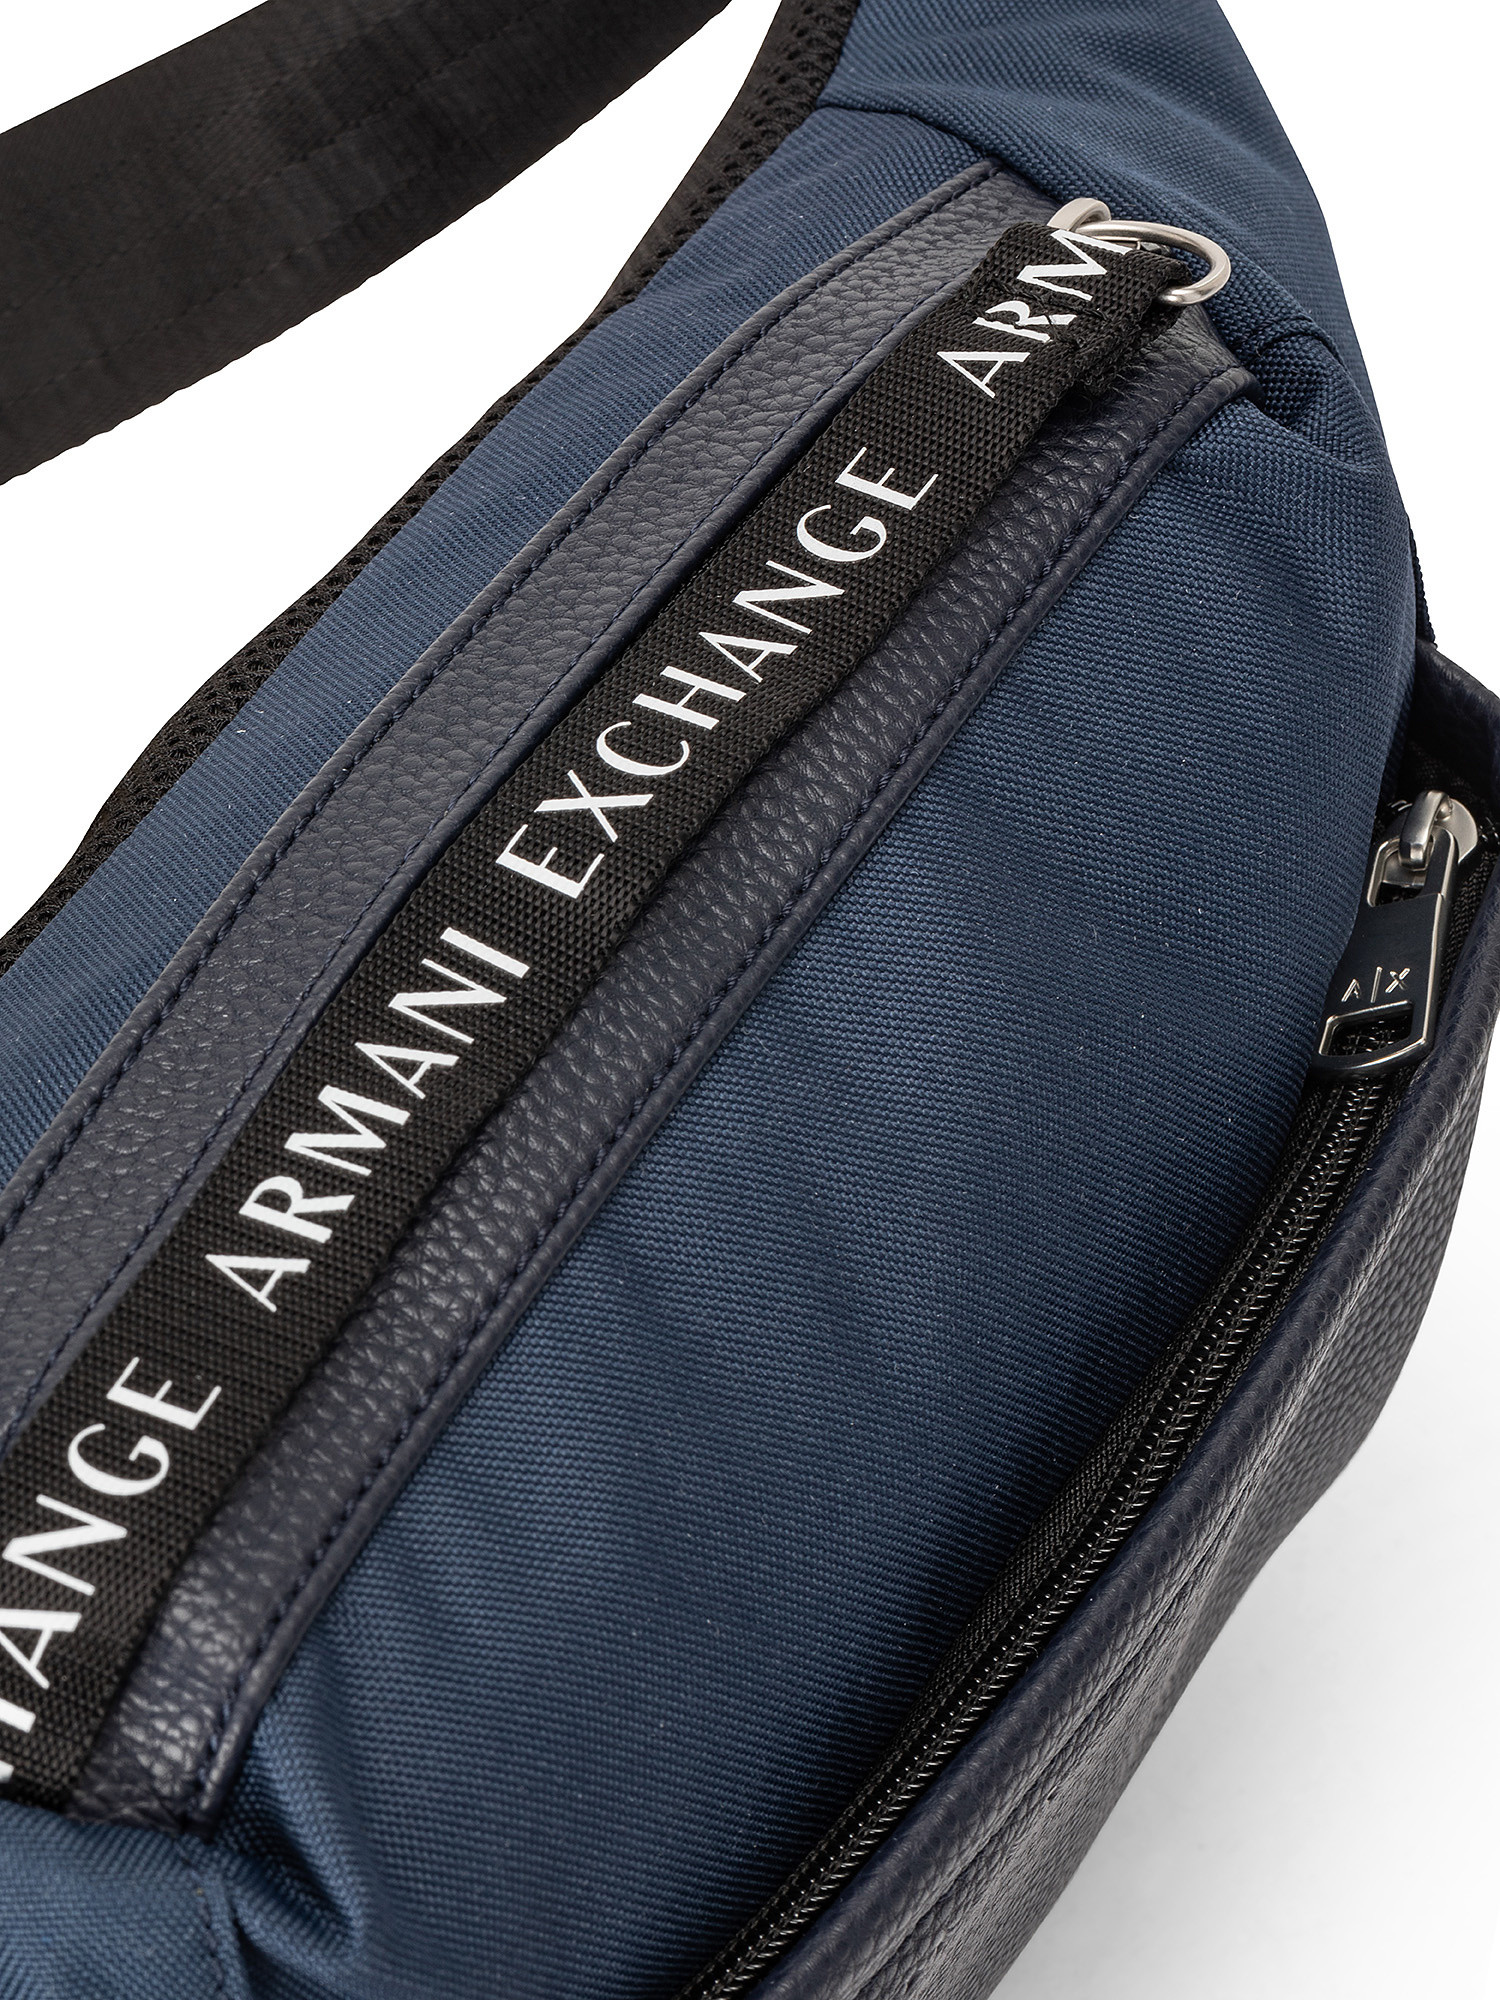 Armani Exchange - Marsupio con logo tape, Blu, large image number 2